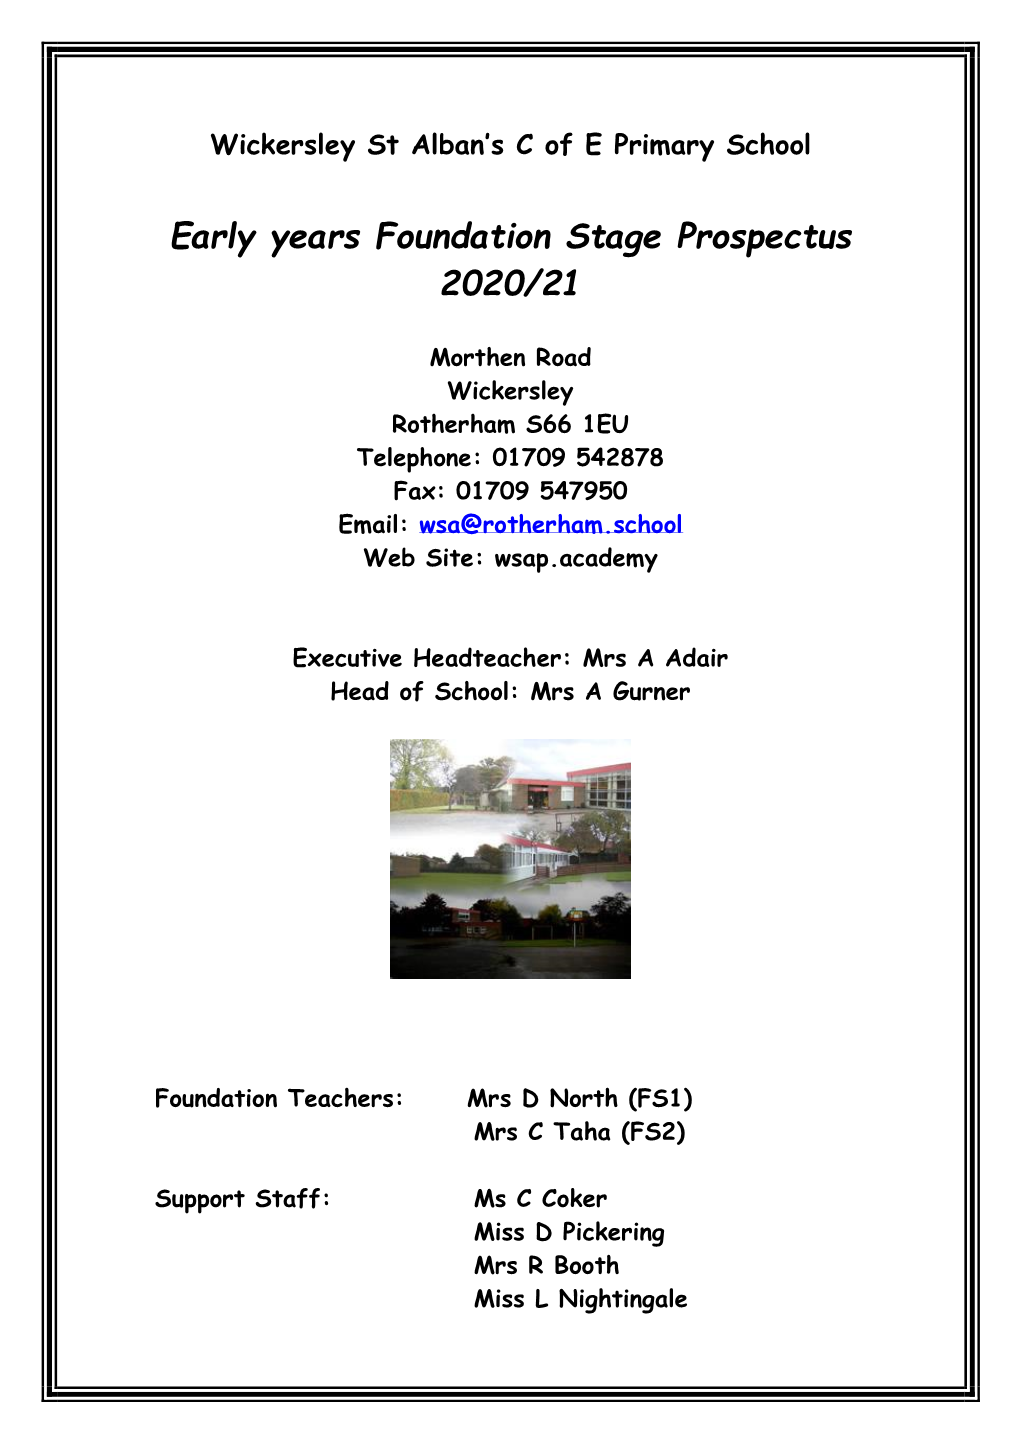 Foundation Stage Prospectus 2020-21